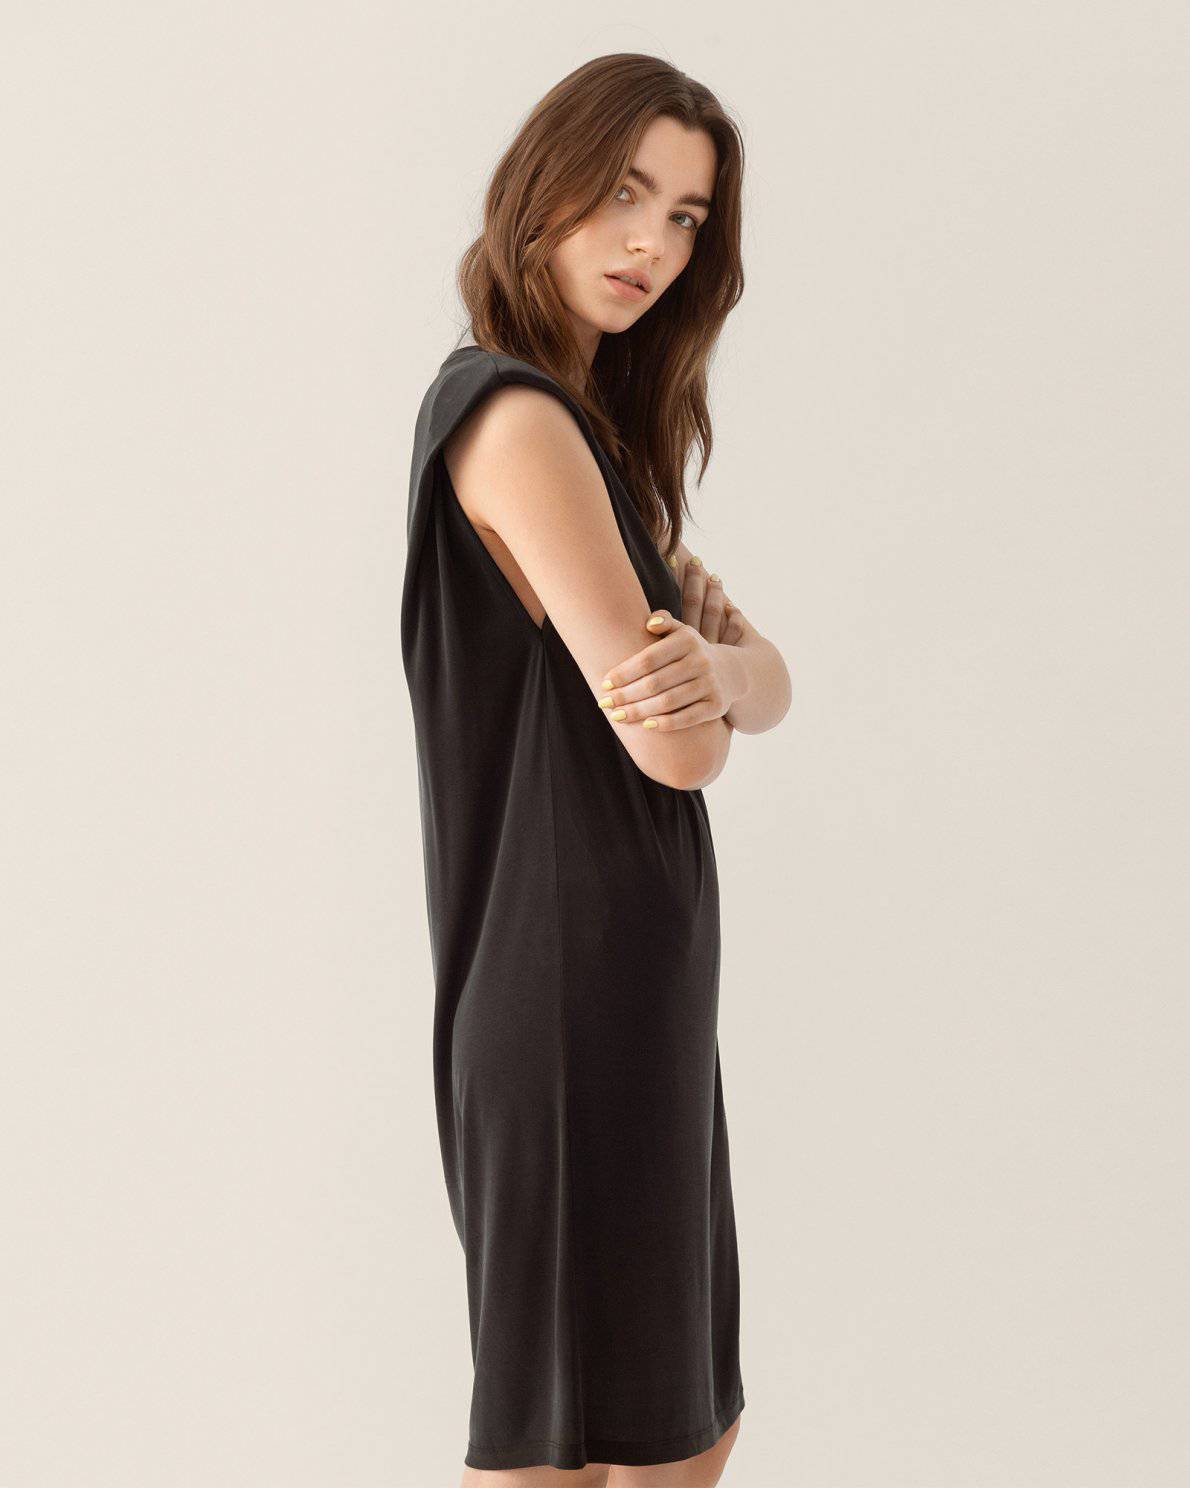 Moss Copenhagen Sleeveless Dress in Black - Your Style Your Story